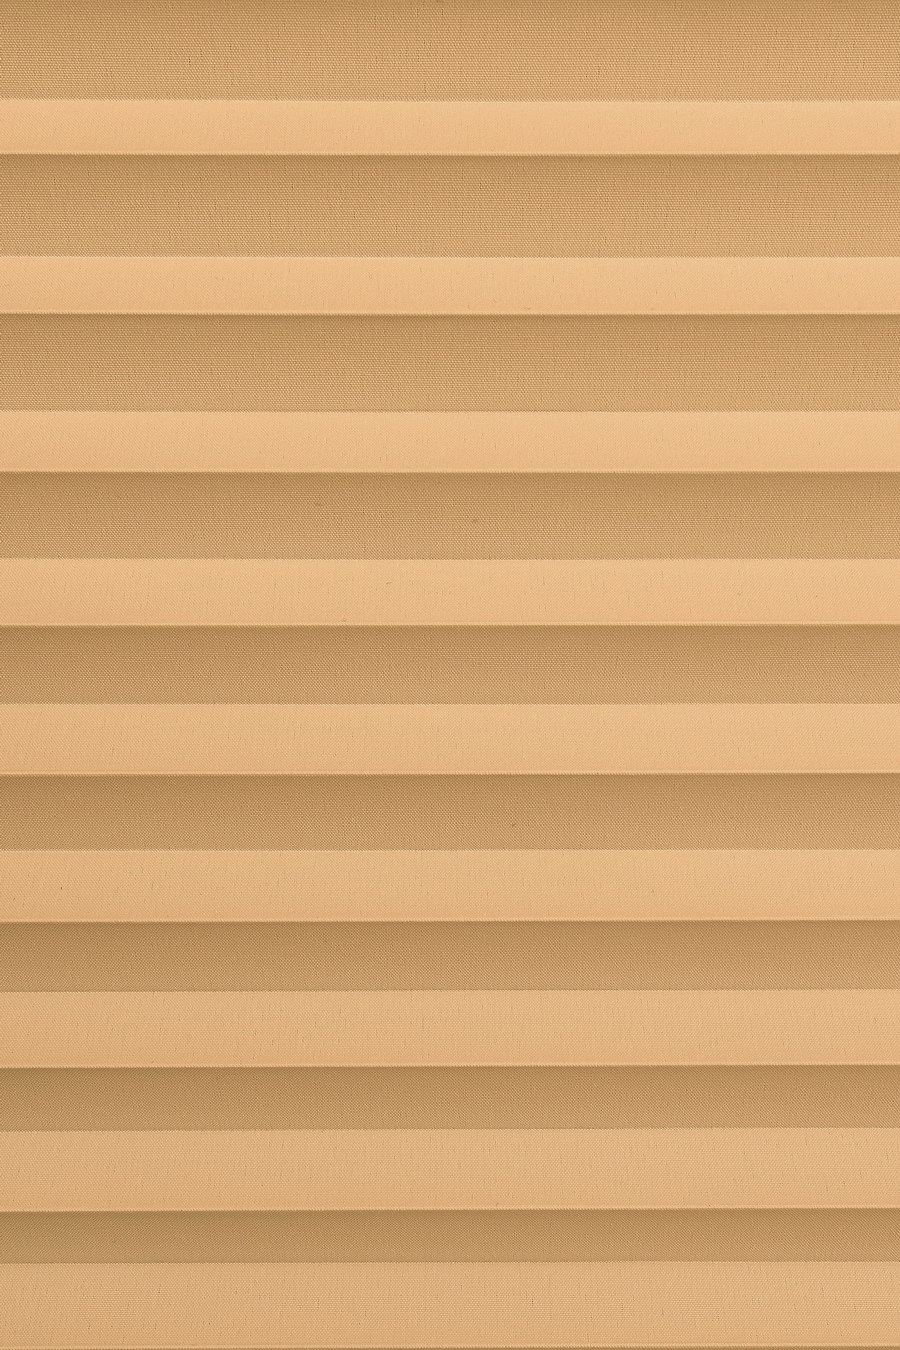 Ткань BASIC UNI beige 9106 для штор плиссе